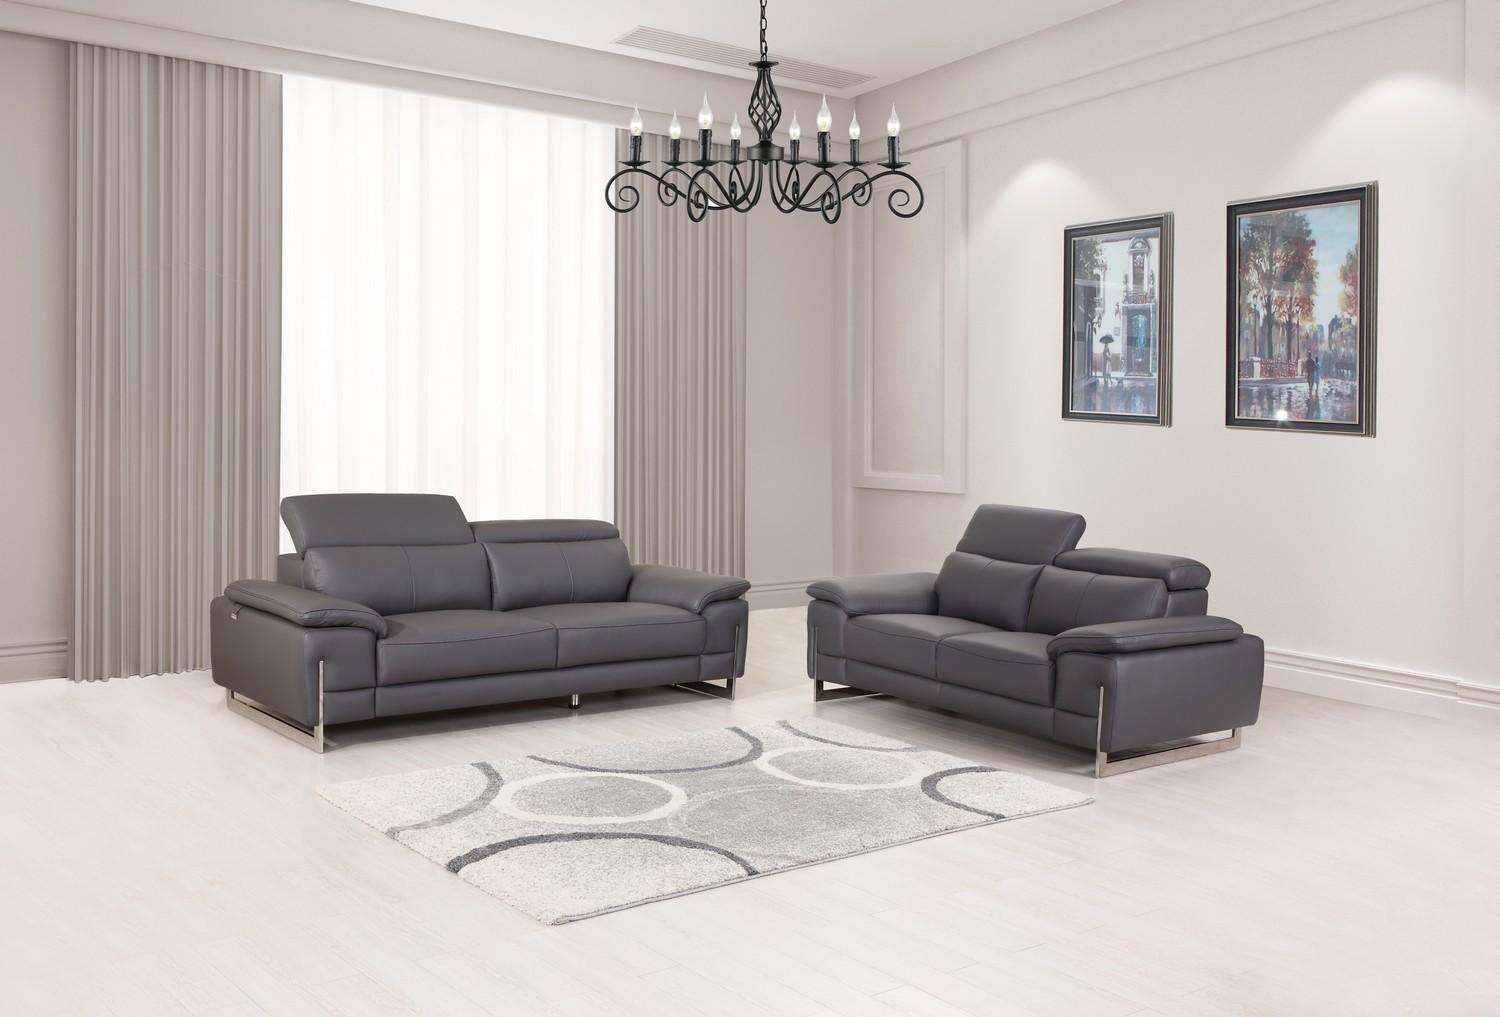 Contemporary Sofa Loveseat 636 636-DARK-GRAY-2PC in Dark Gray Italian Leather